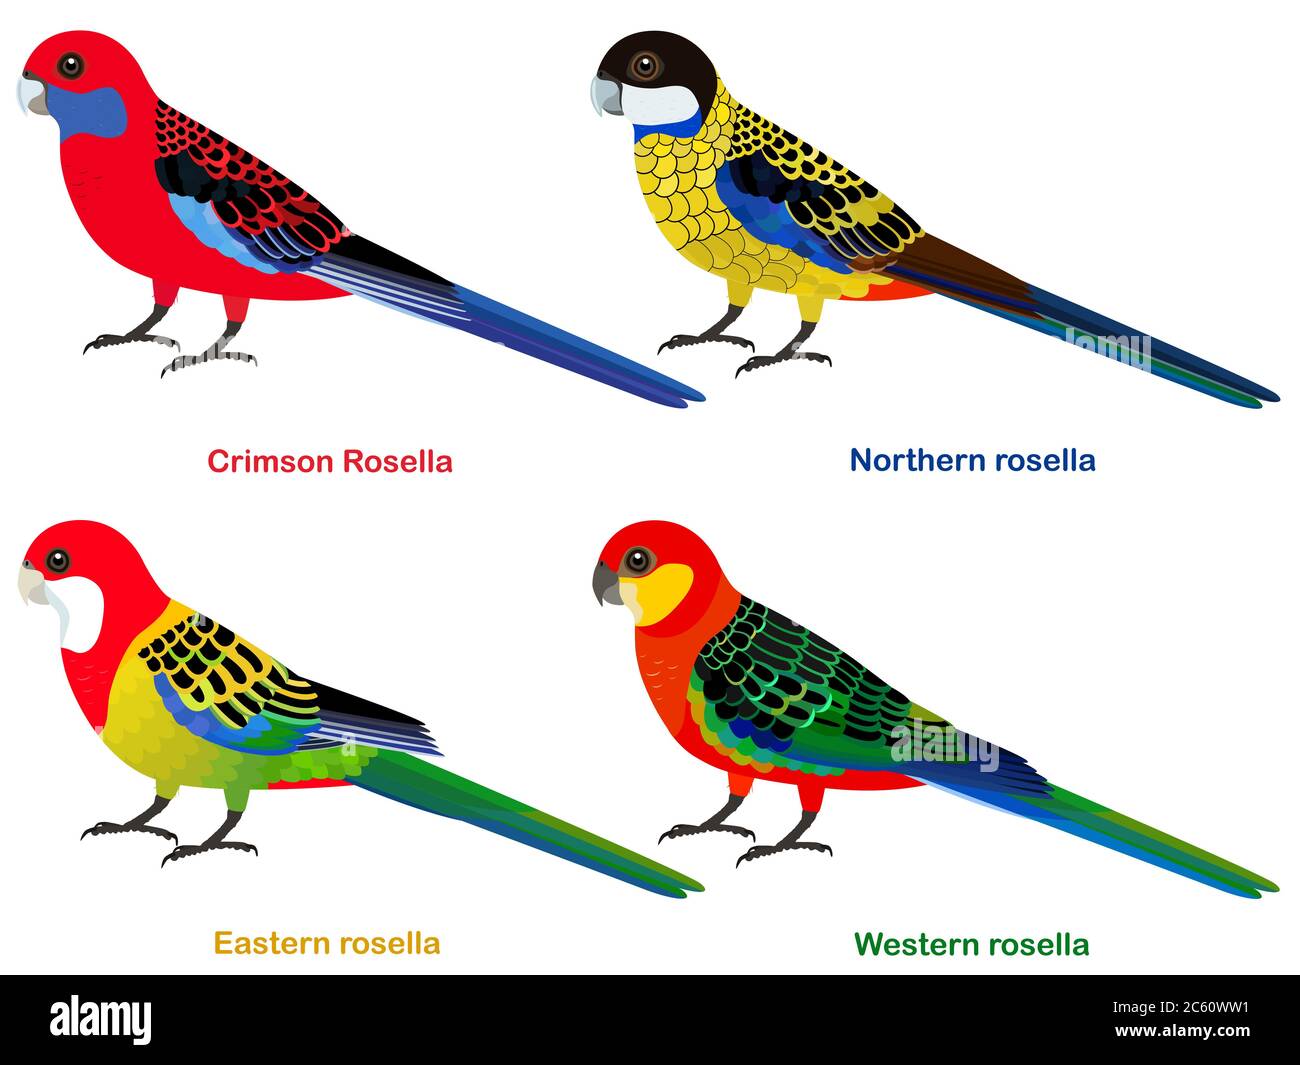 Cute Australia parrots, Rosella bird vector illustration set, Eastern rosella, Western rosella, Crimson Rosella, Northern Rosella, Colorful bird carto Stock Vector